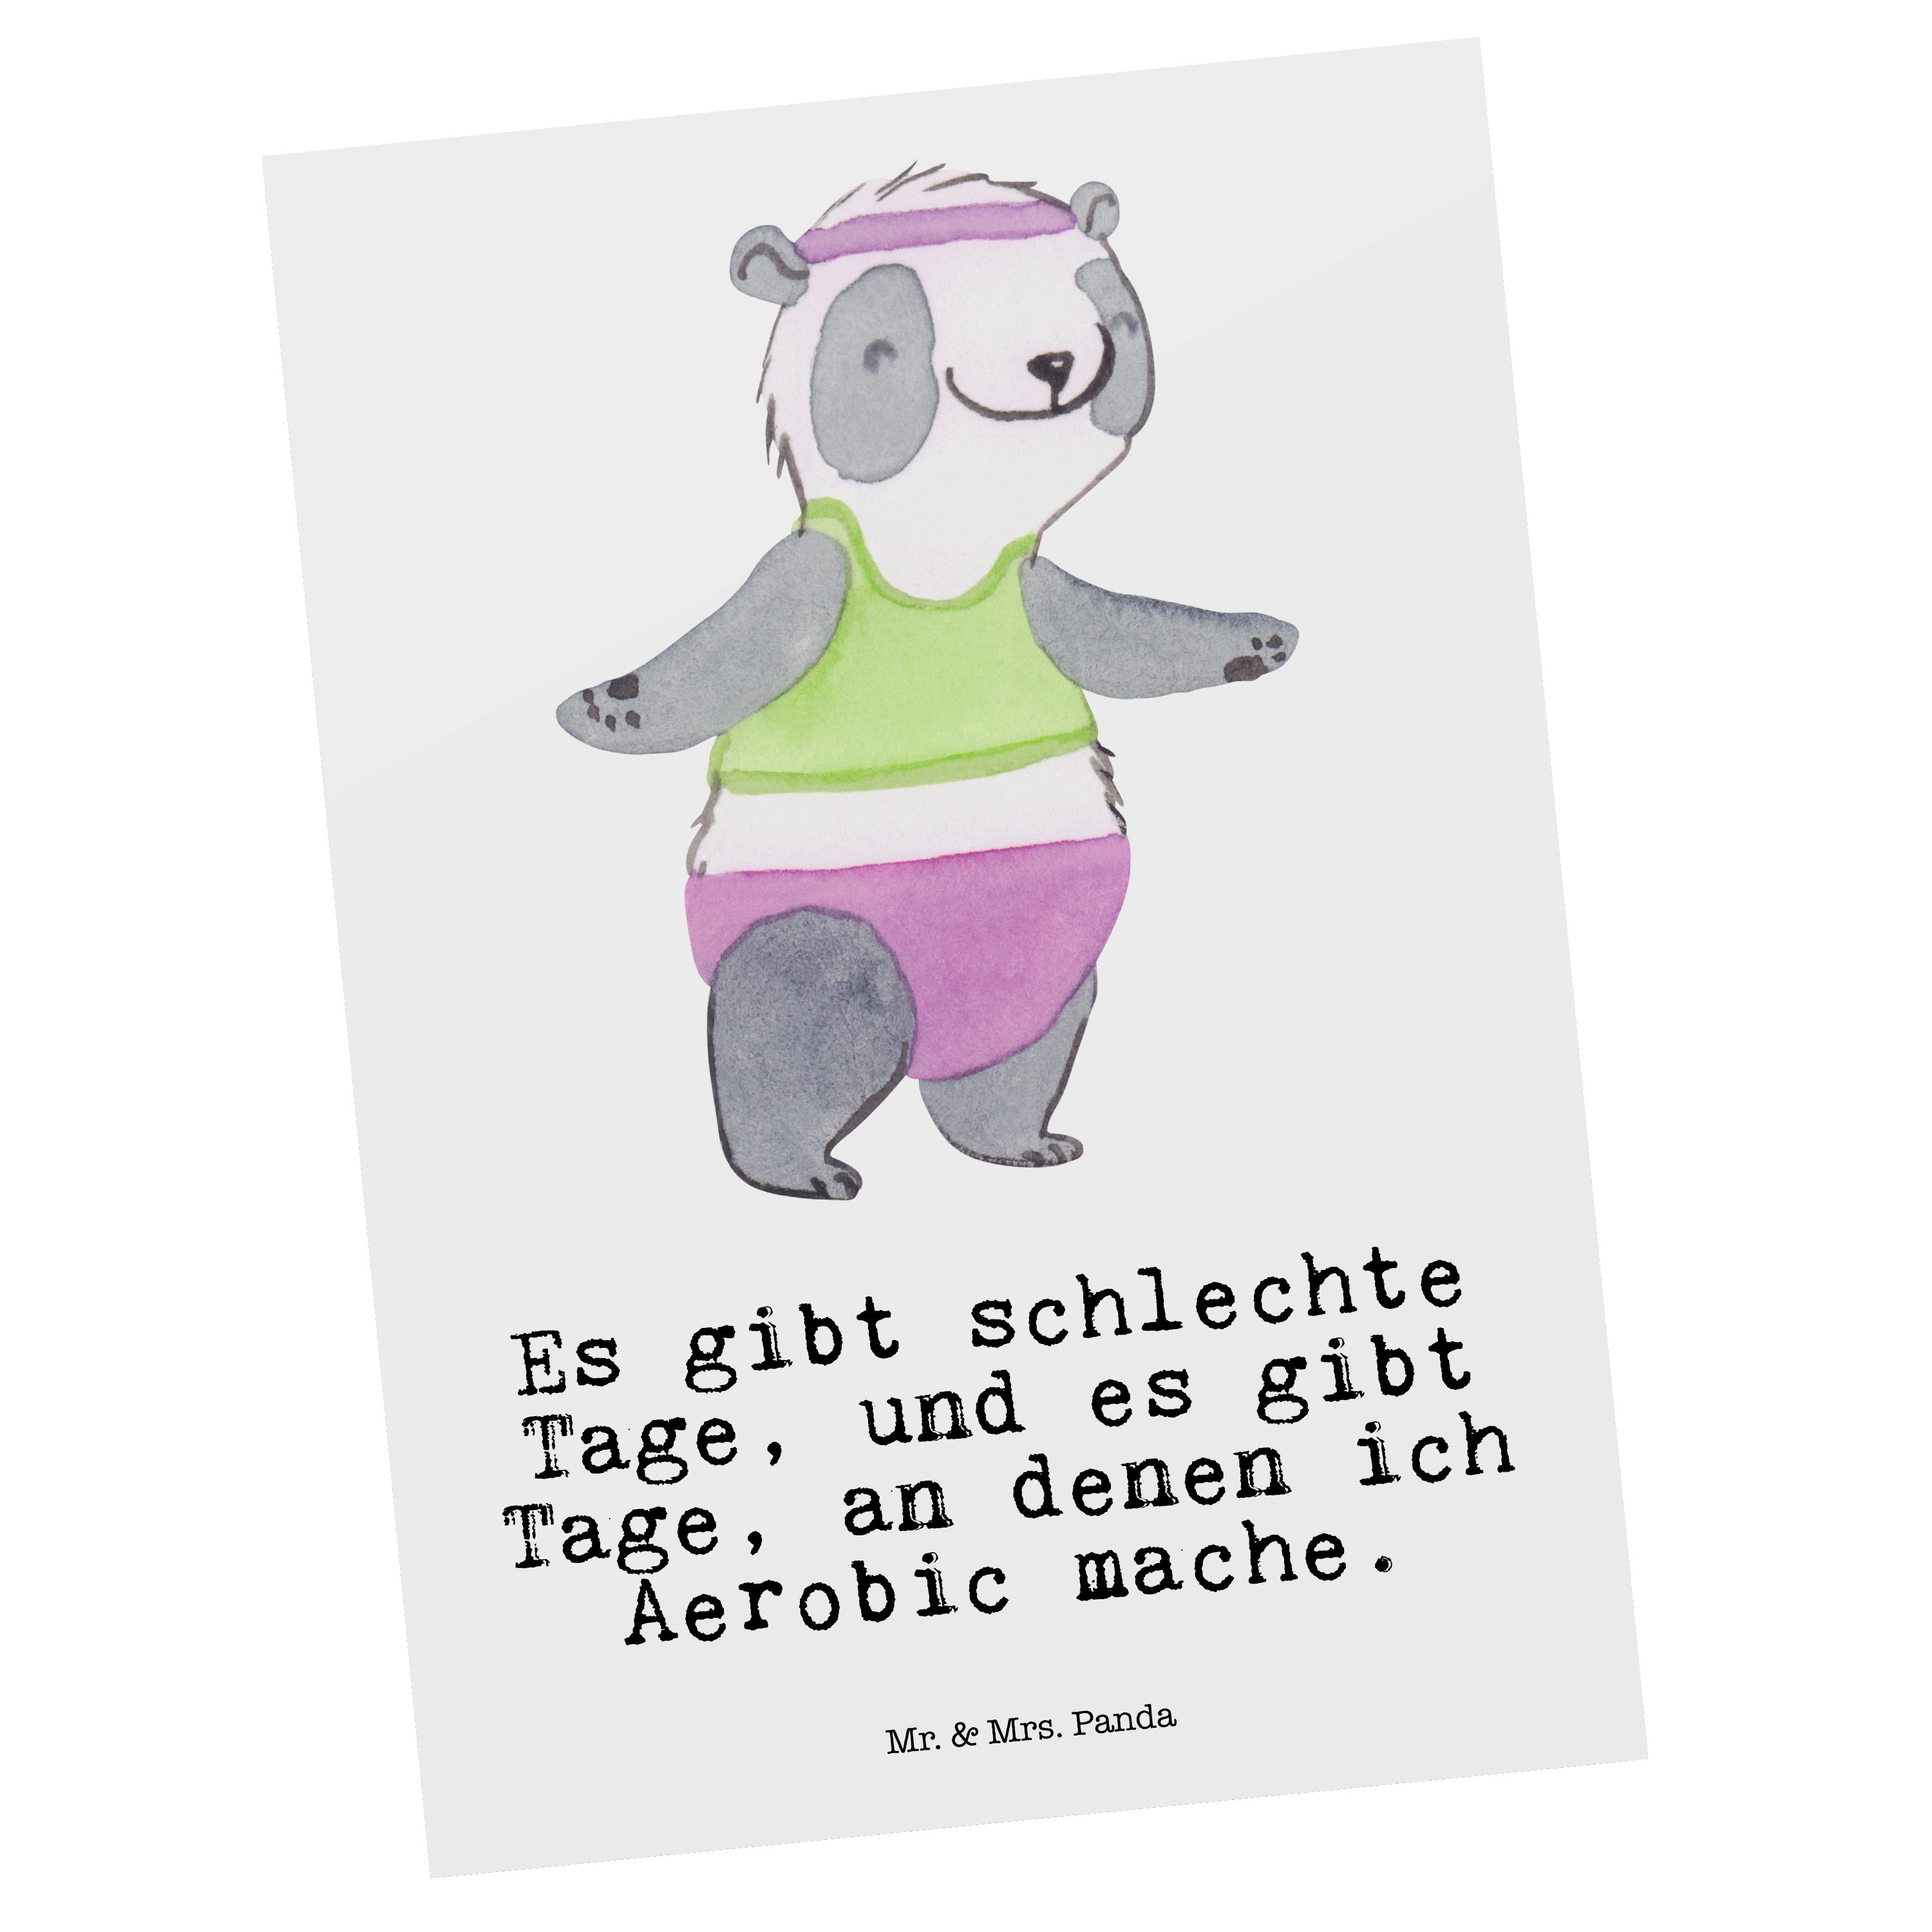 Mr. & Mrs. Panda Postkarte Panda Aerobic Tage - Weiß - Geschenk, Karte, Grußkarte, Aerobic Fitne